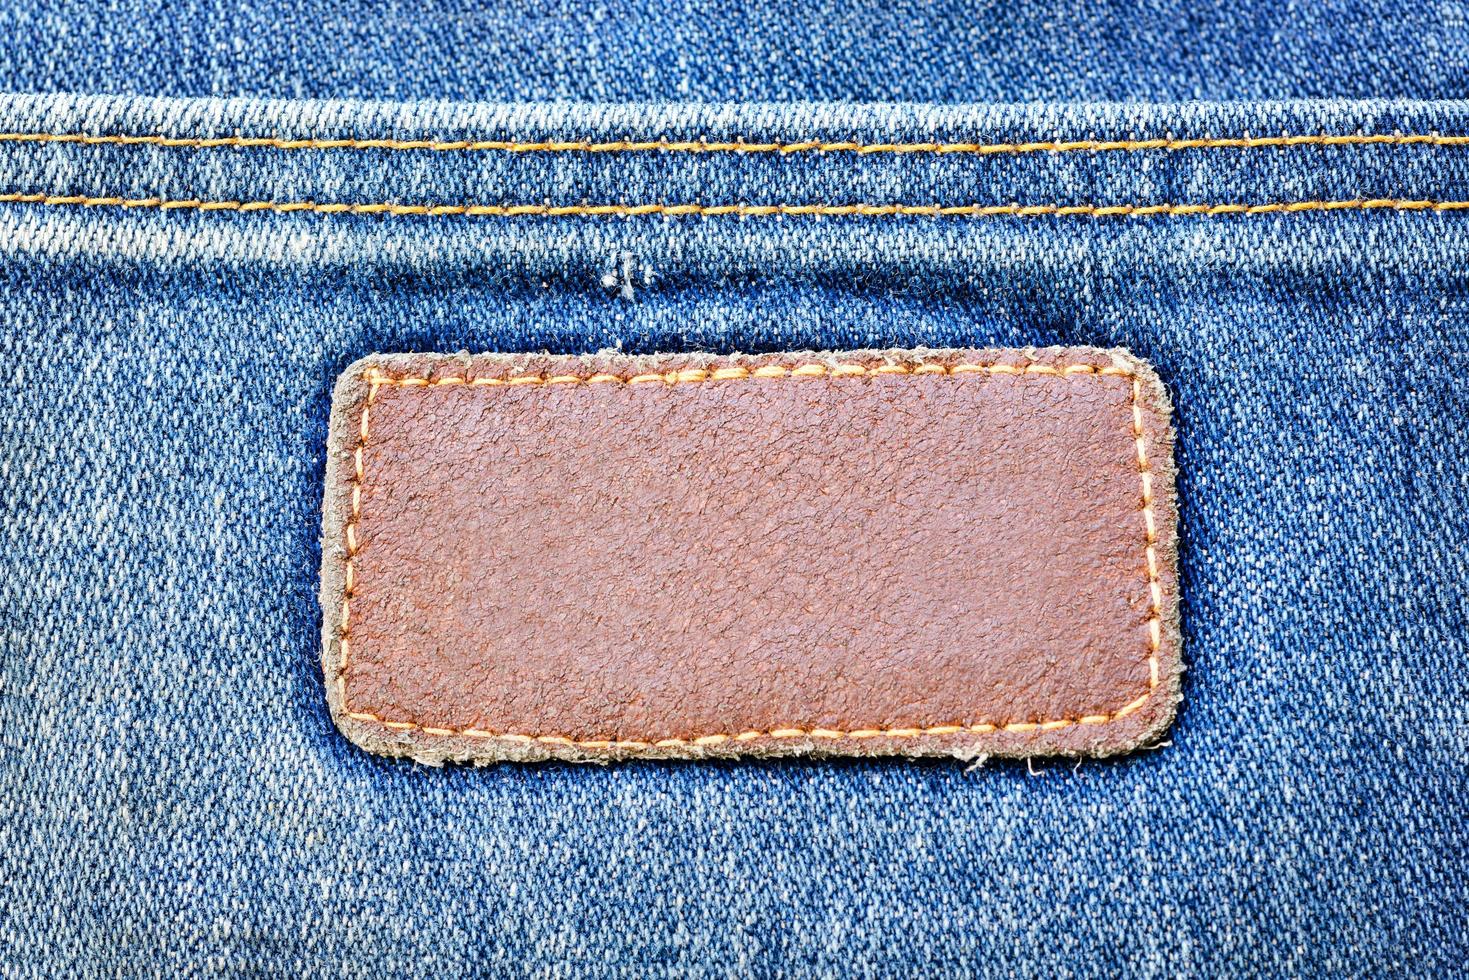 Blue Jeans Texture Denim Background Fashion Pattern photo